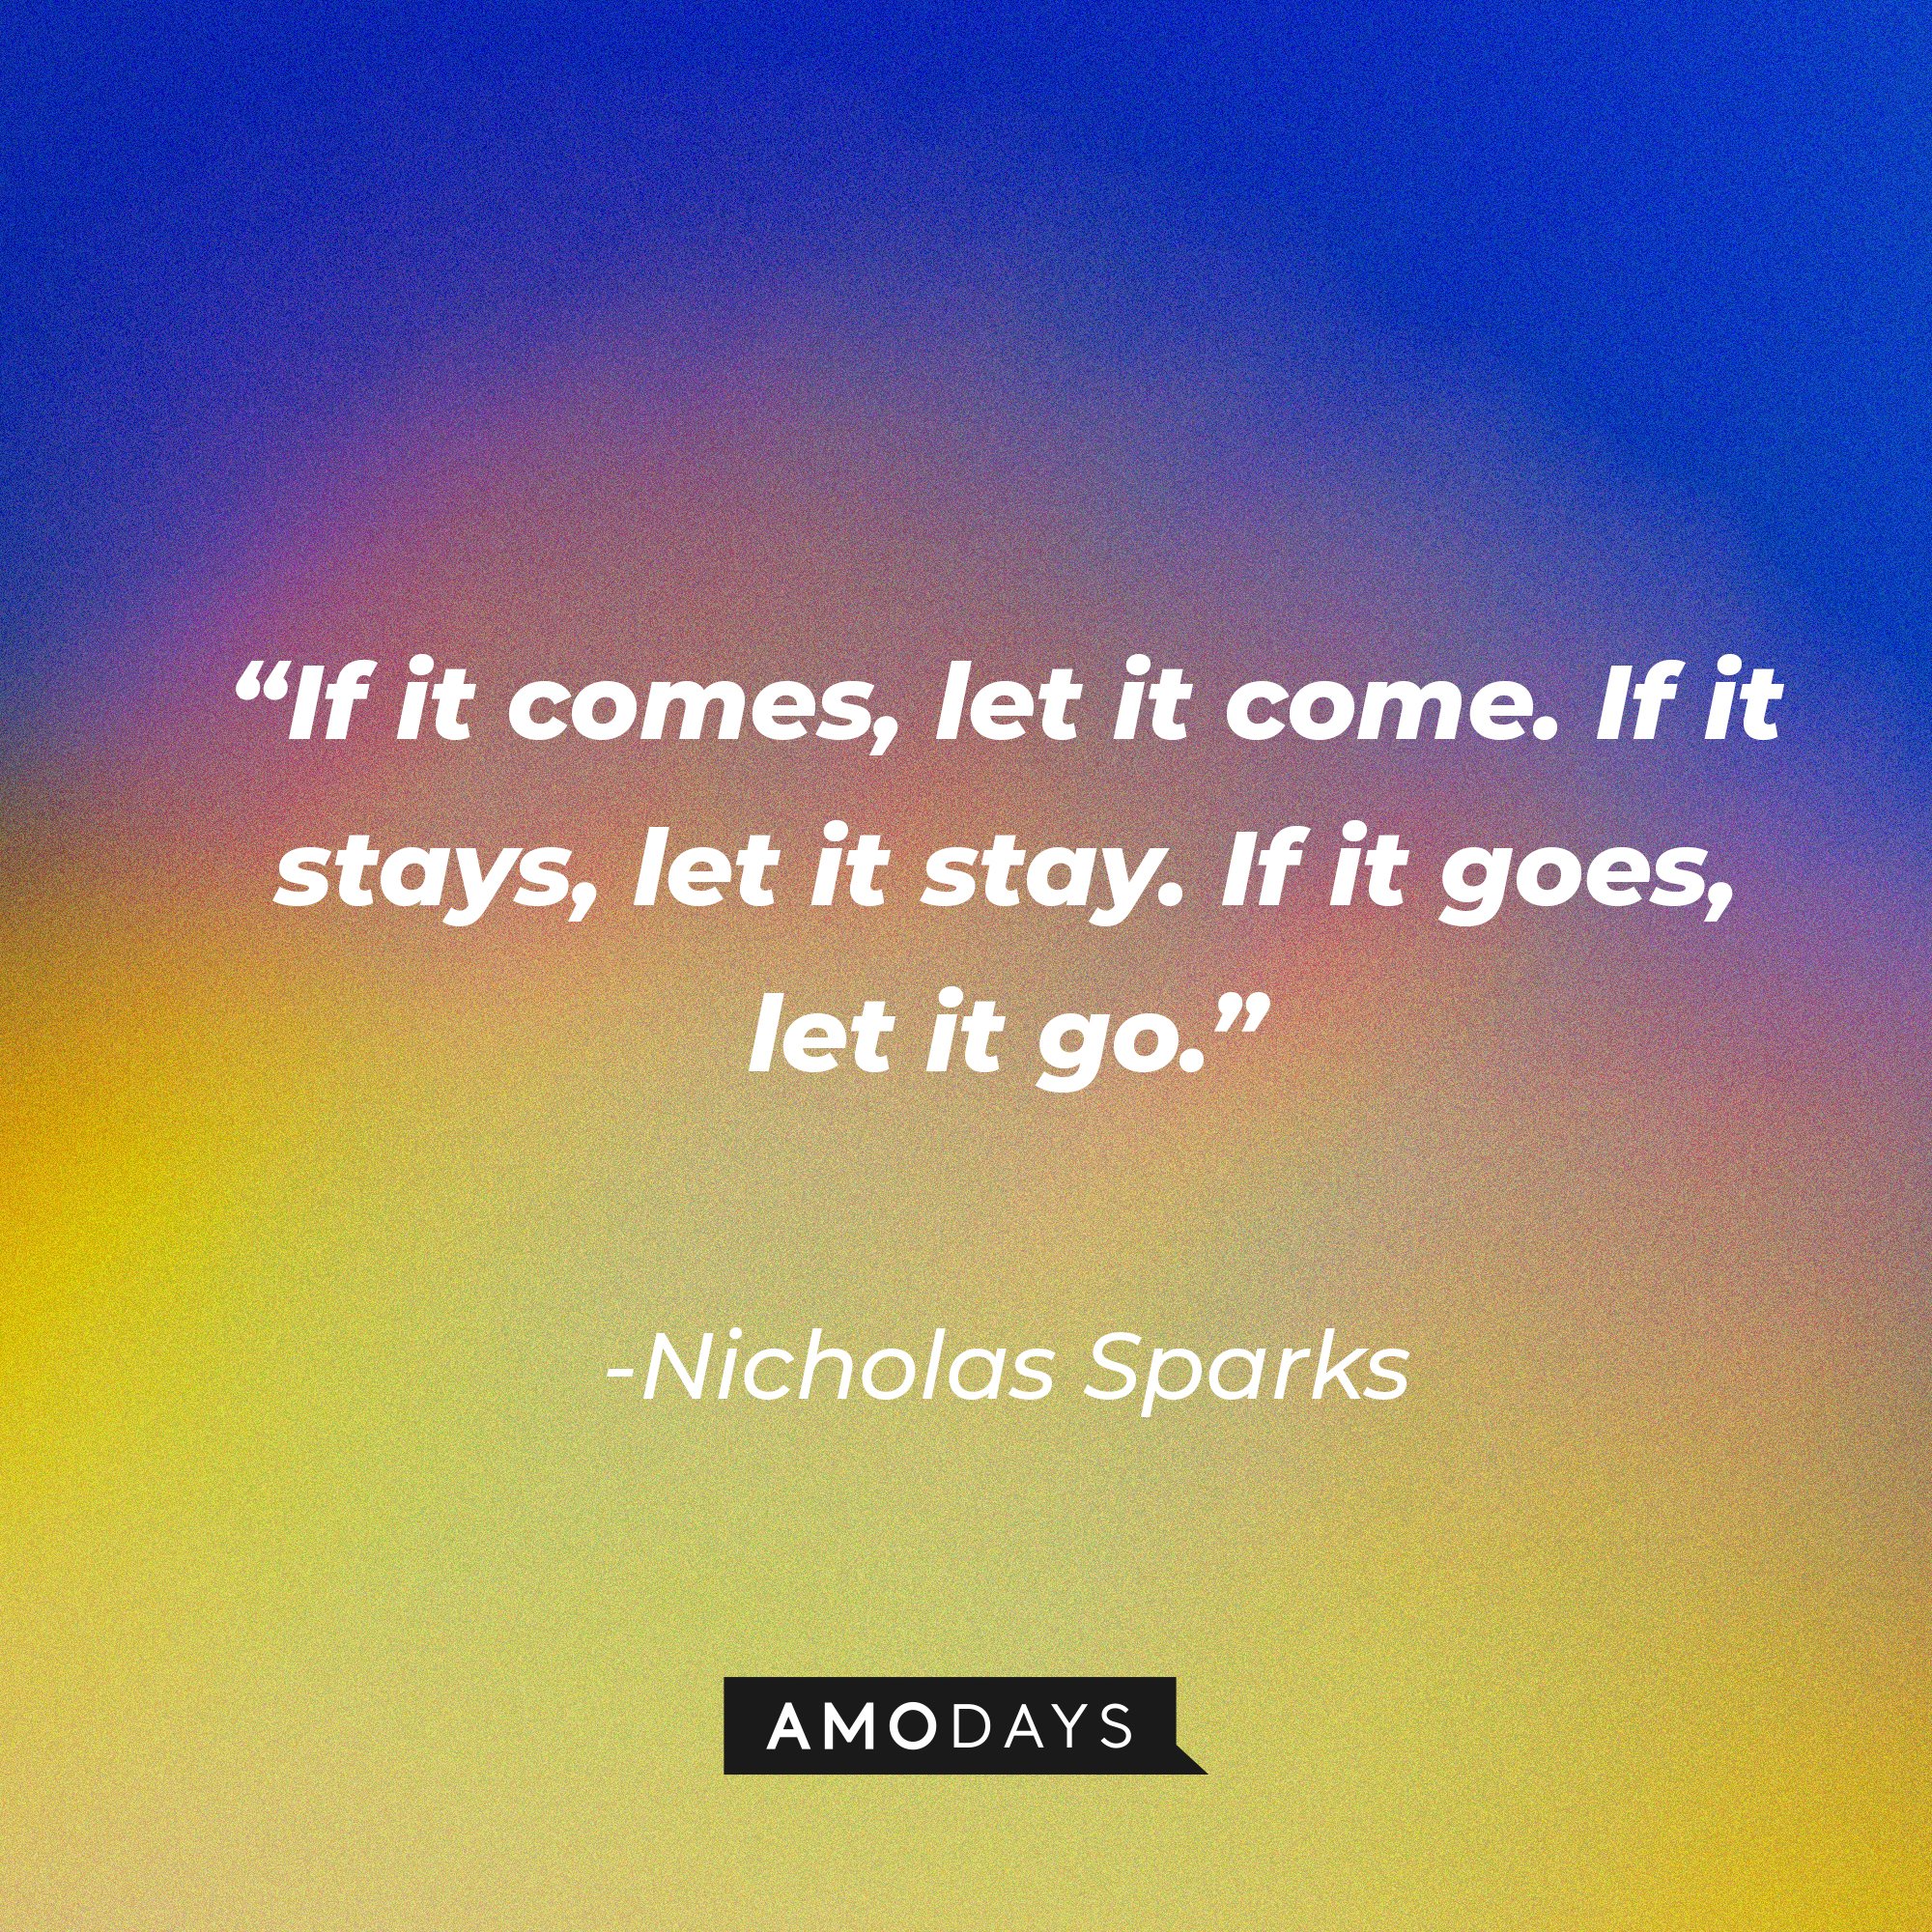 Nicholas Sparks's quote: “If it comes, let it come. If it stays, let it stay. If it goes, let it go.” | Image: AmoDays